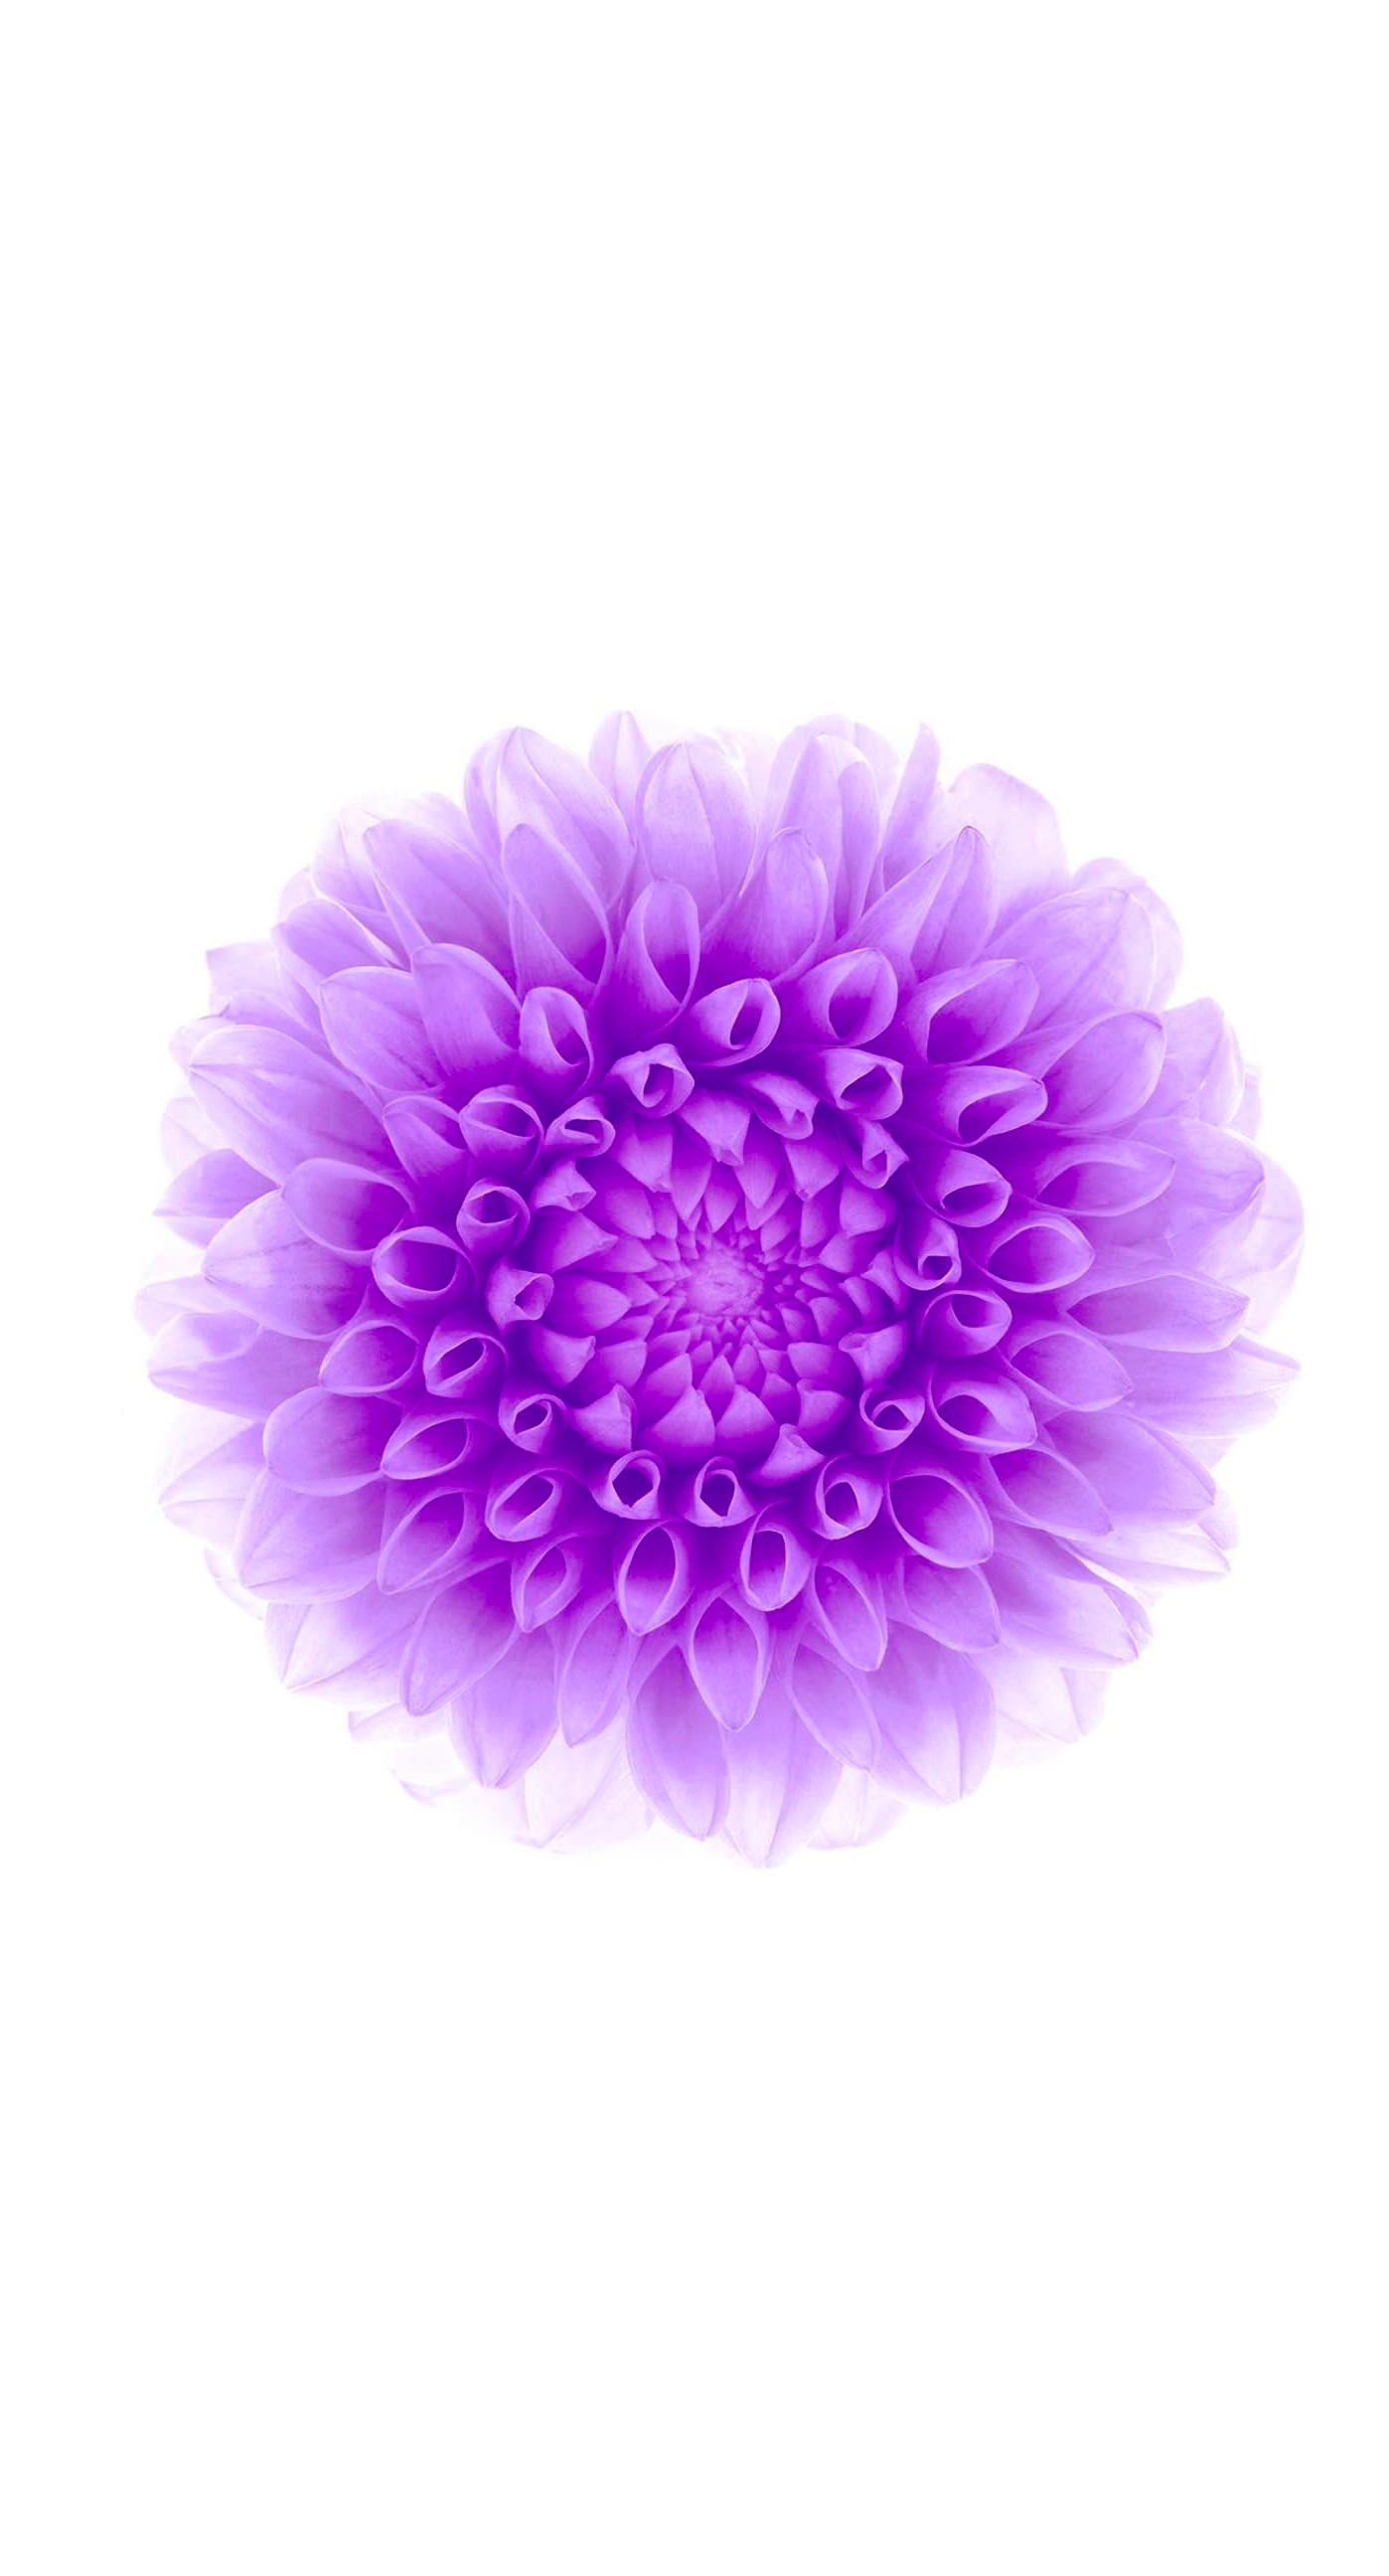 flower purple white. wallpaper.sc iPhone8Plus